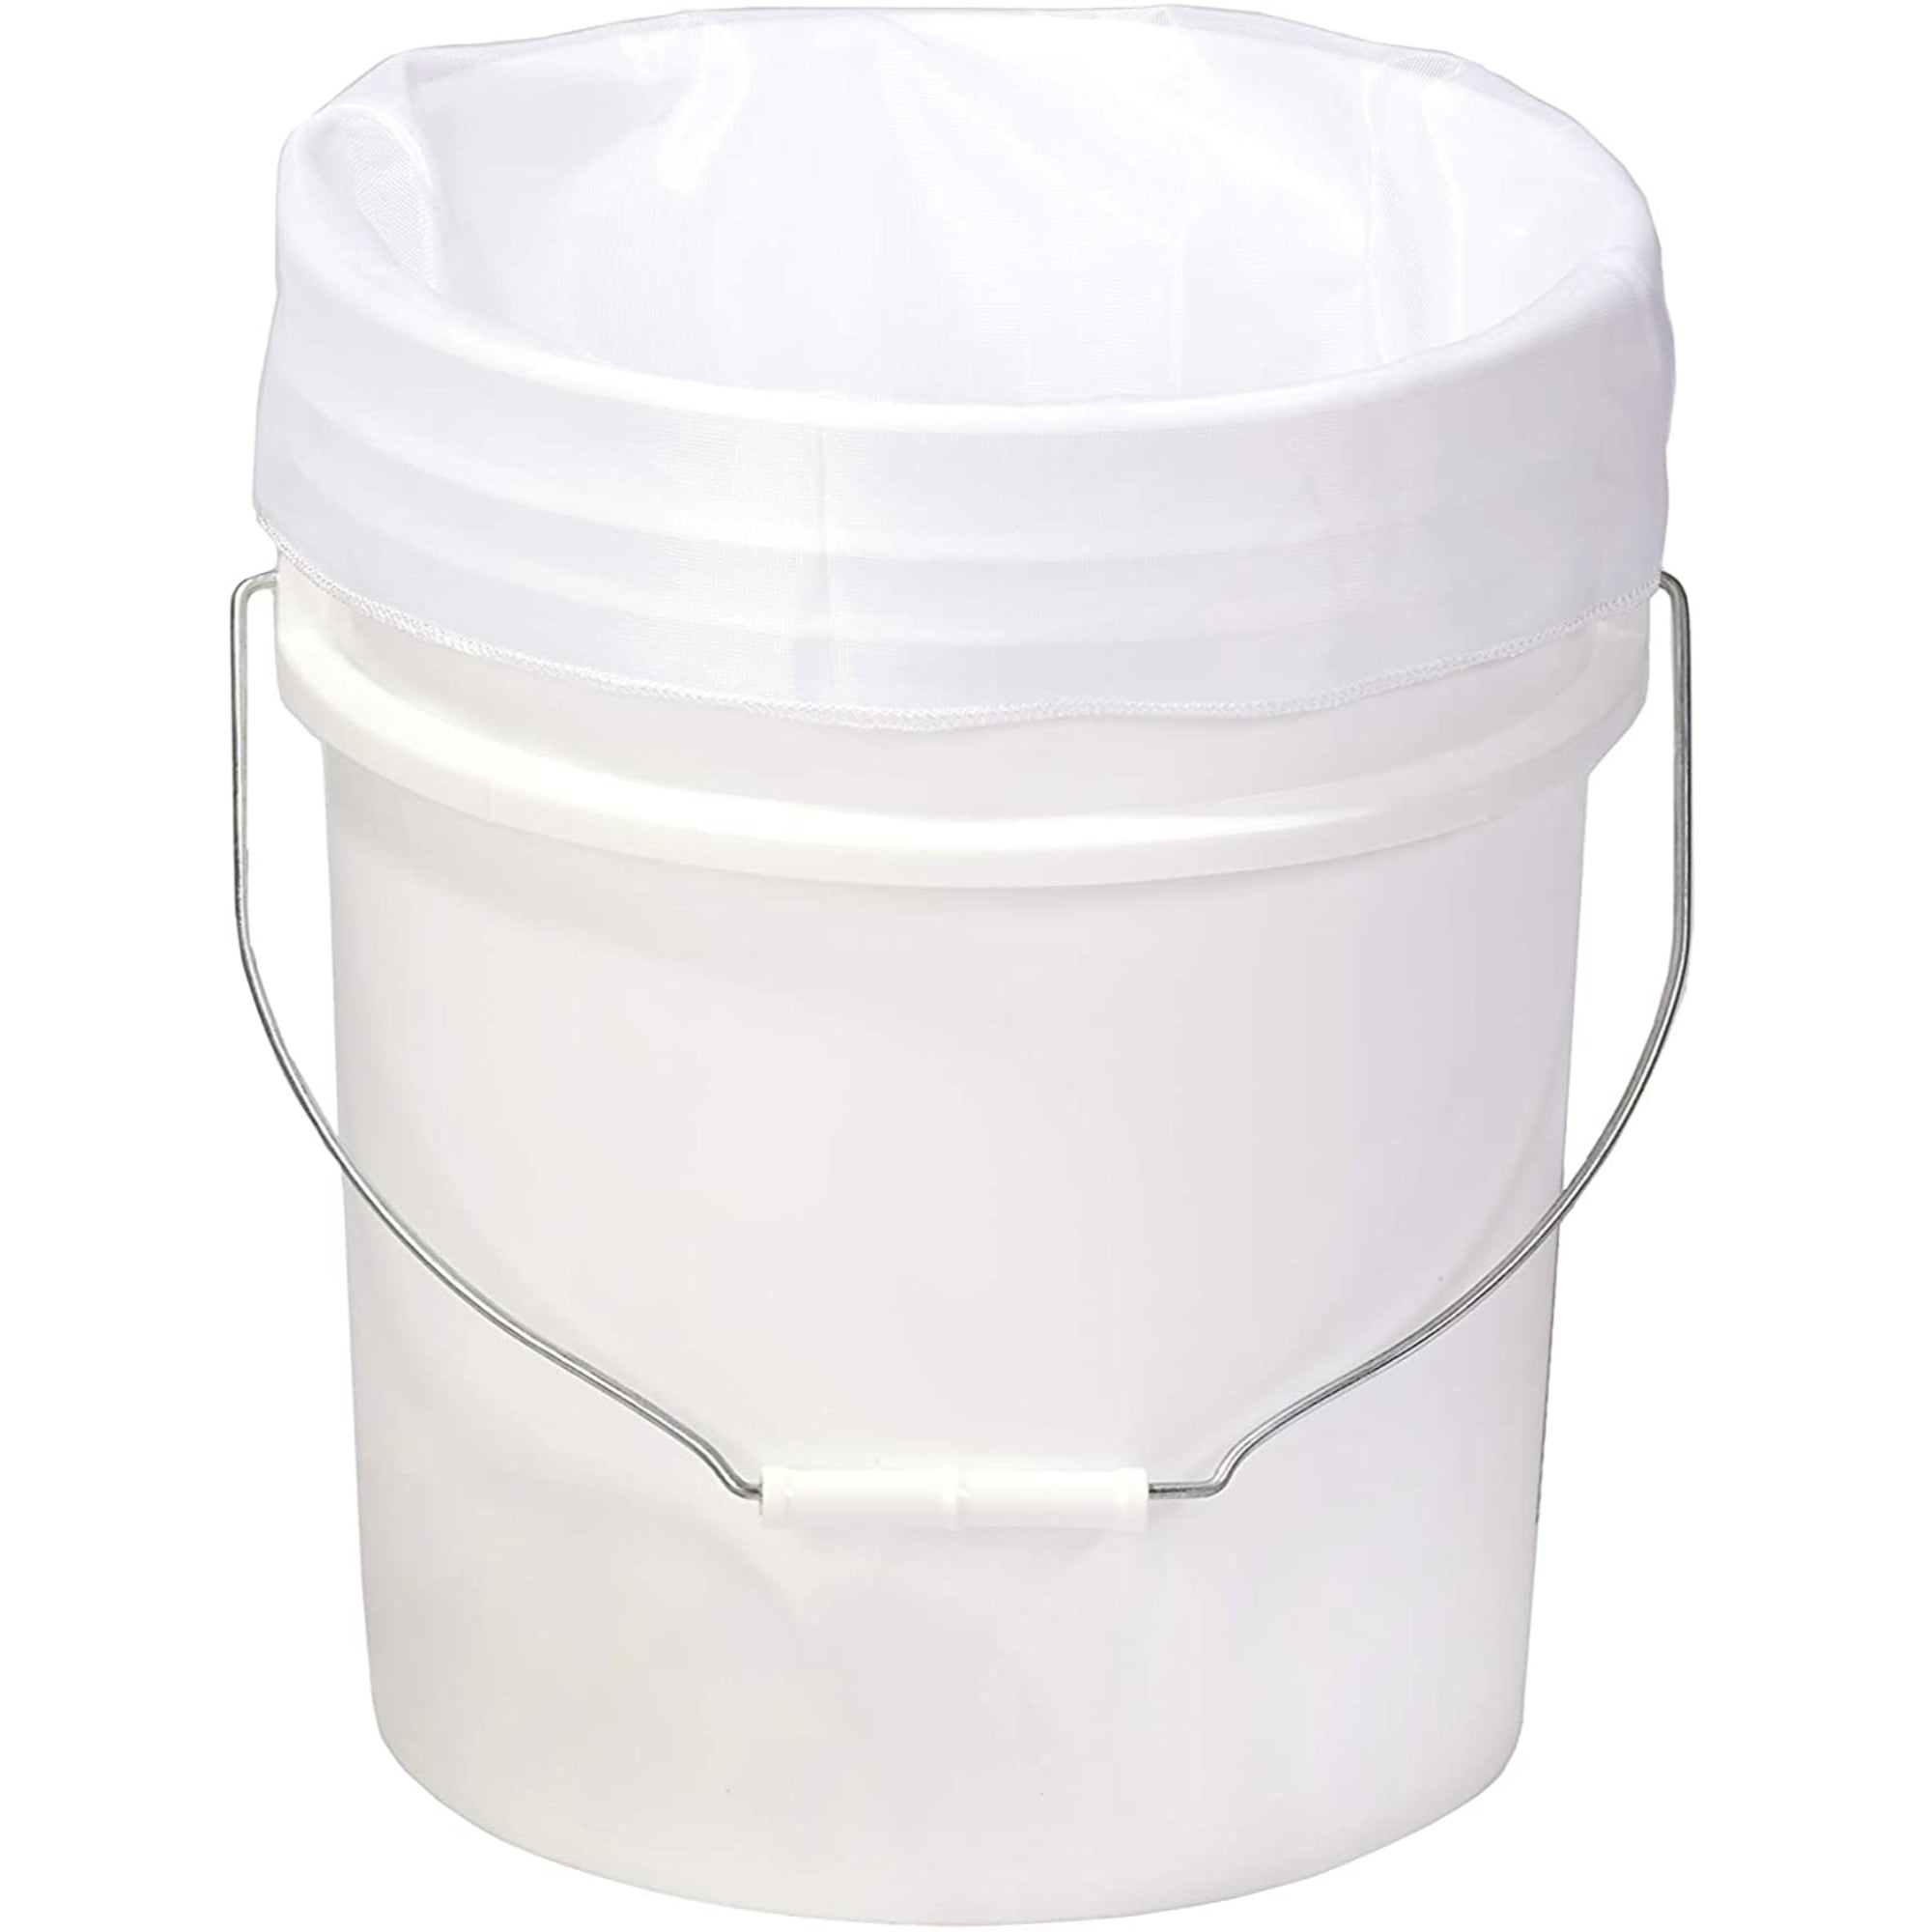 Little Giant Farm & Agriculture Honey Filter For 5 Gallon Bucket, 400 Micron, Reusable